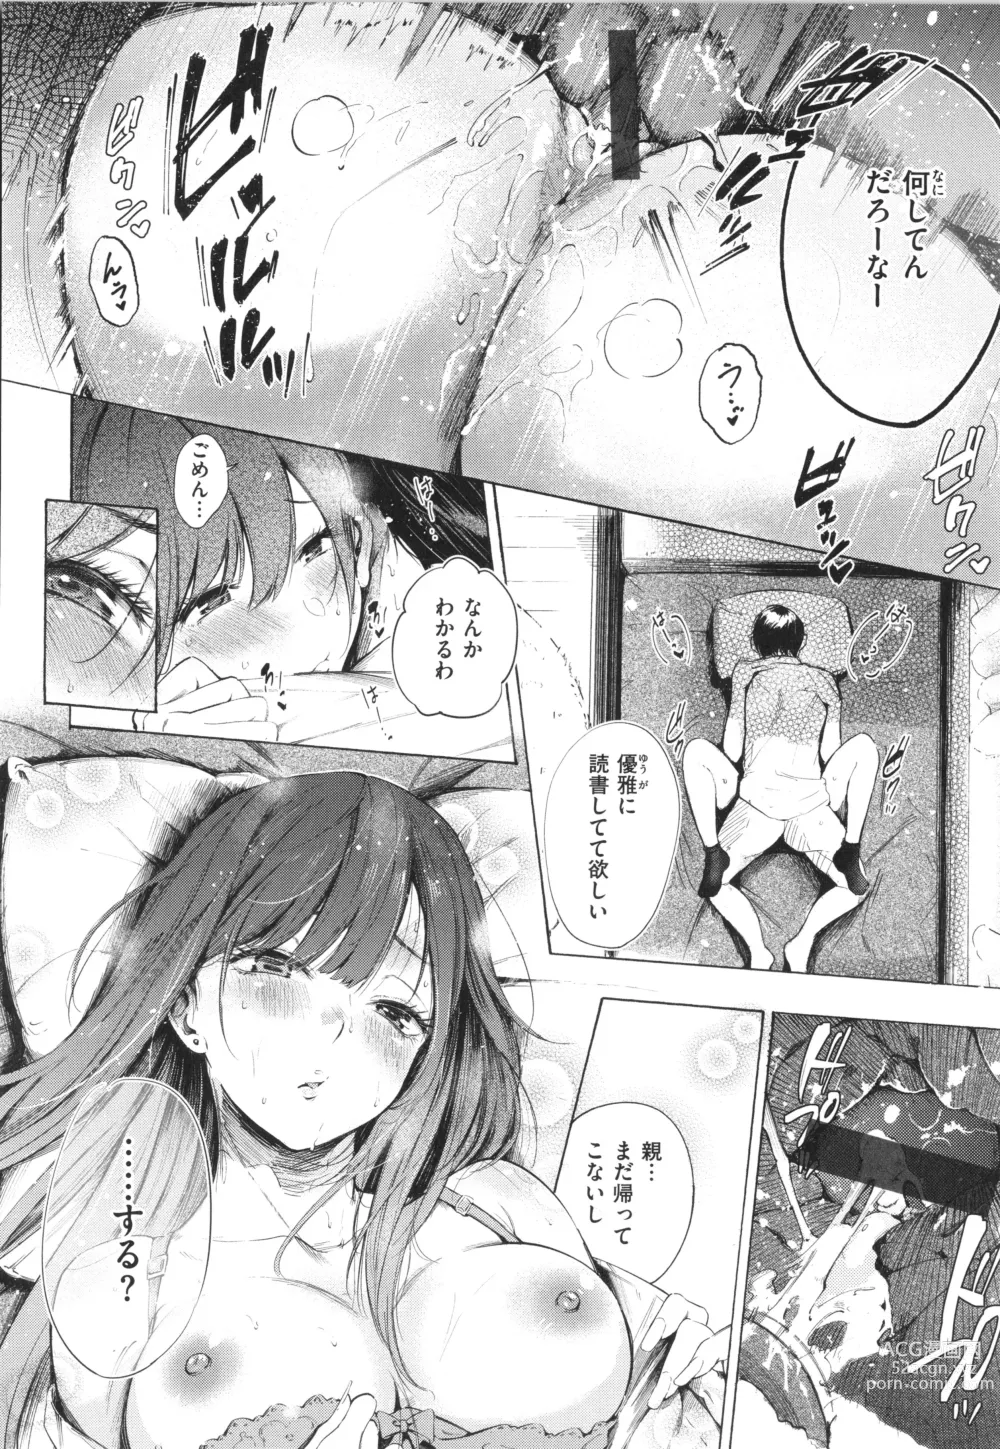 Page 191 of manga Frustration Girls